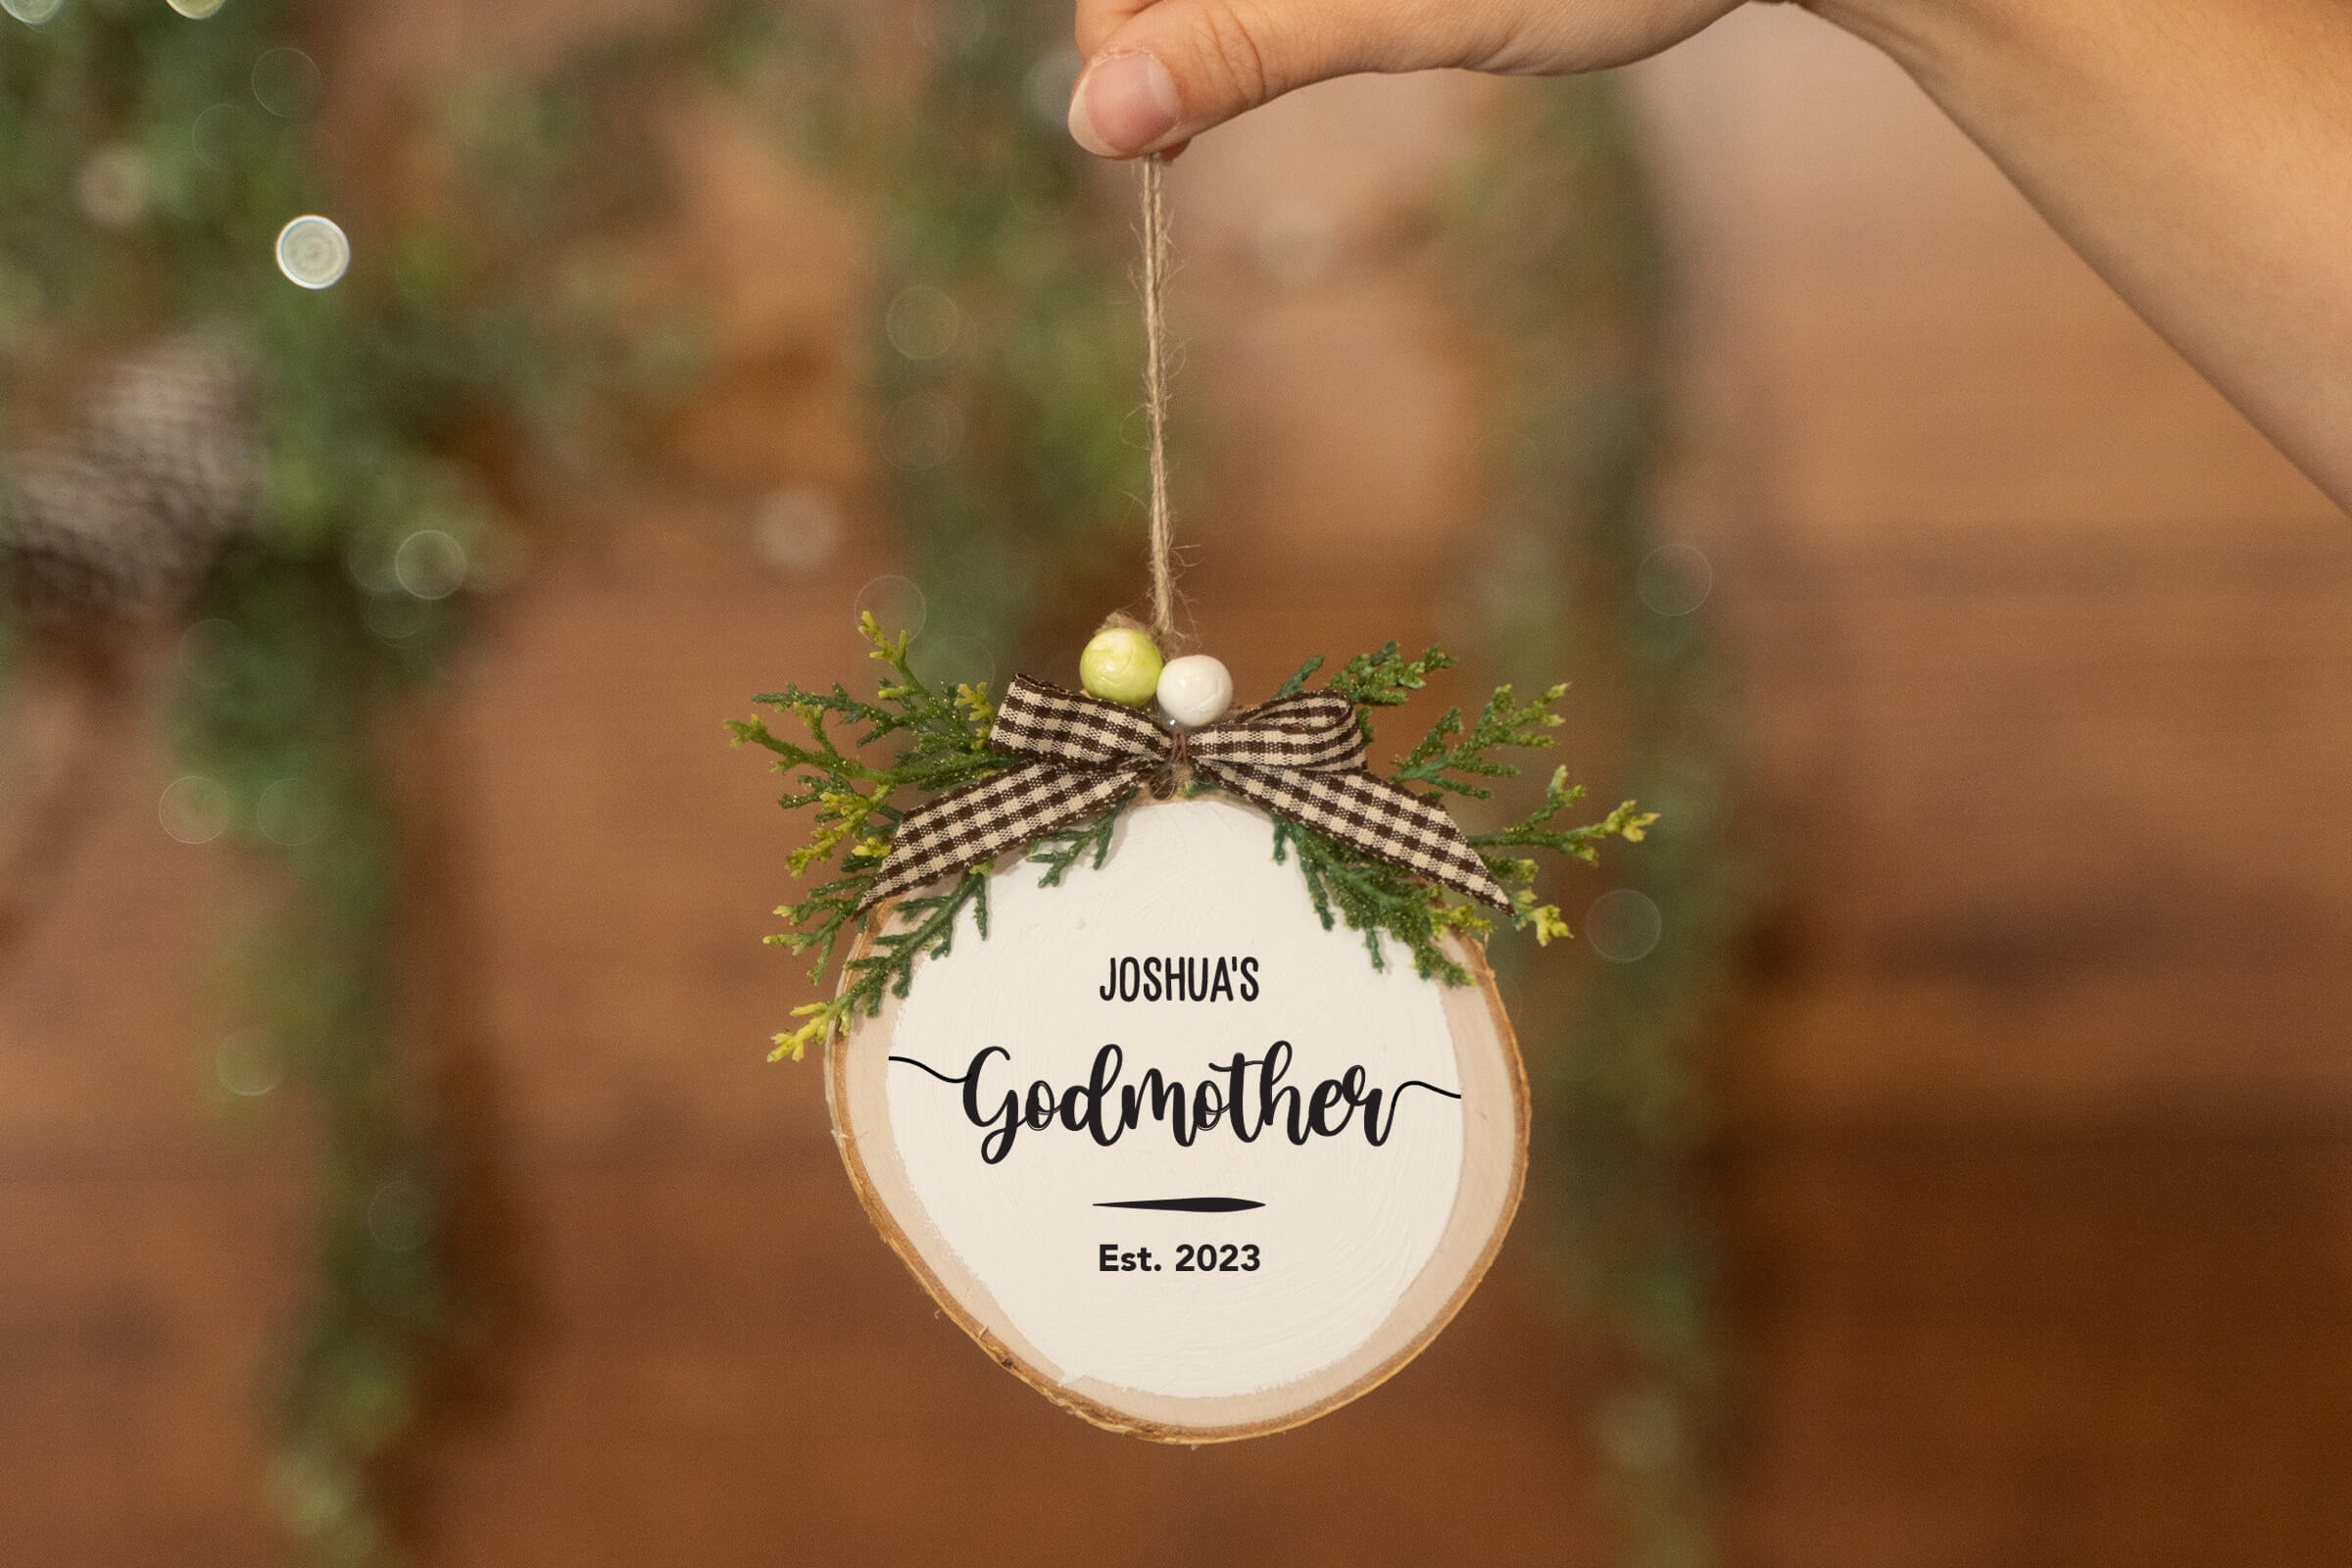 Godmother/Godfather Wooden Christmas Decoration - White